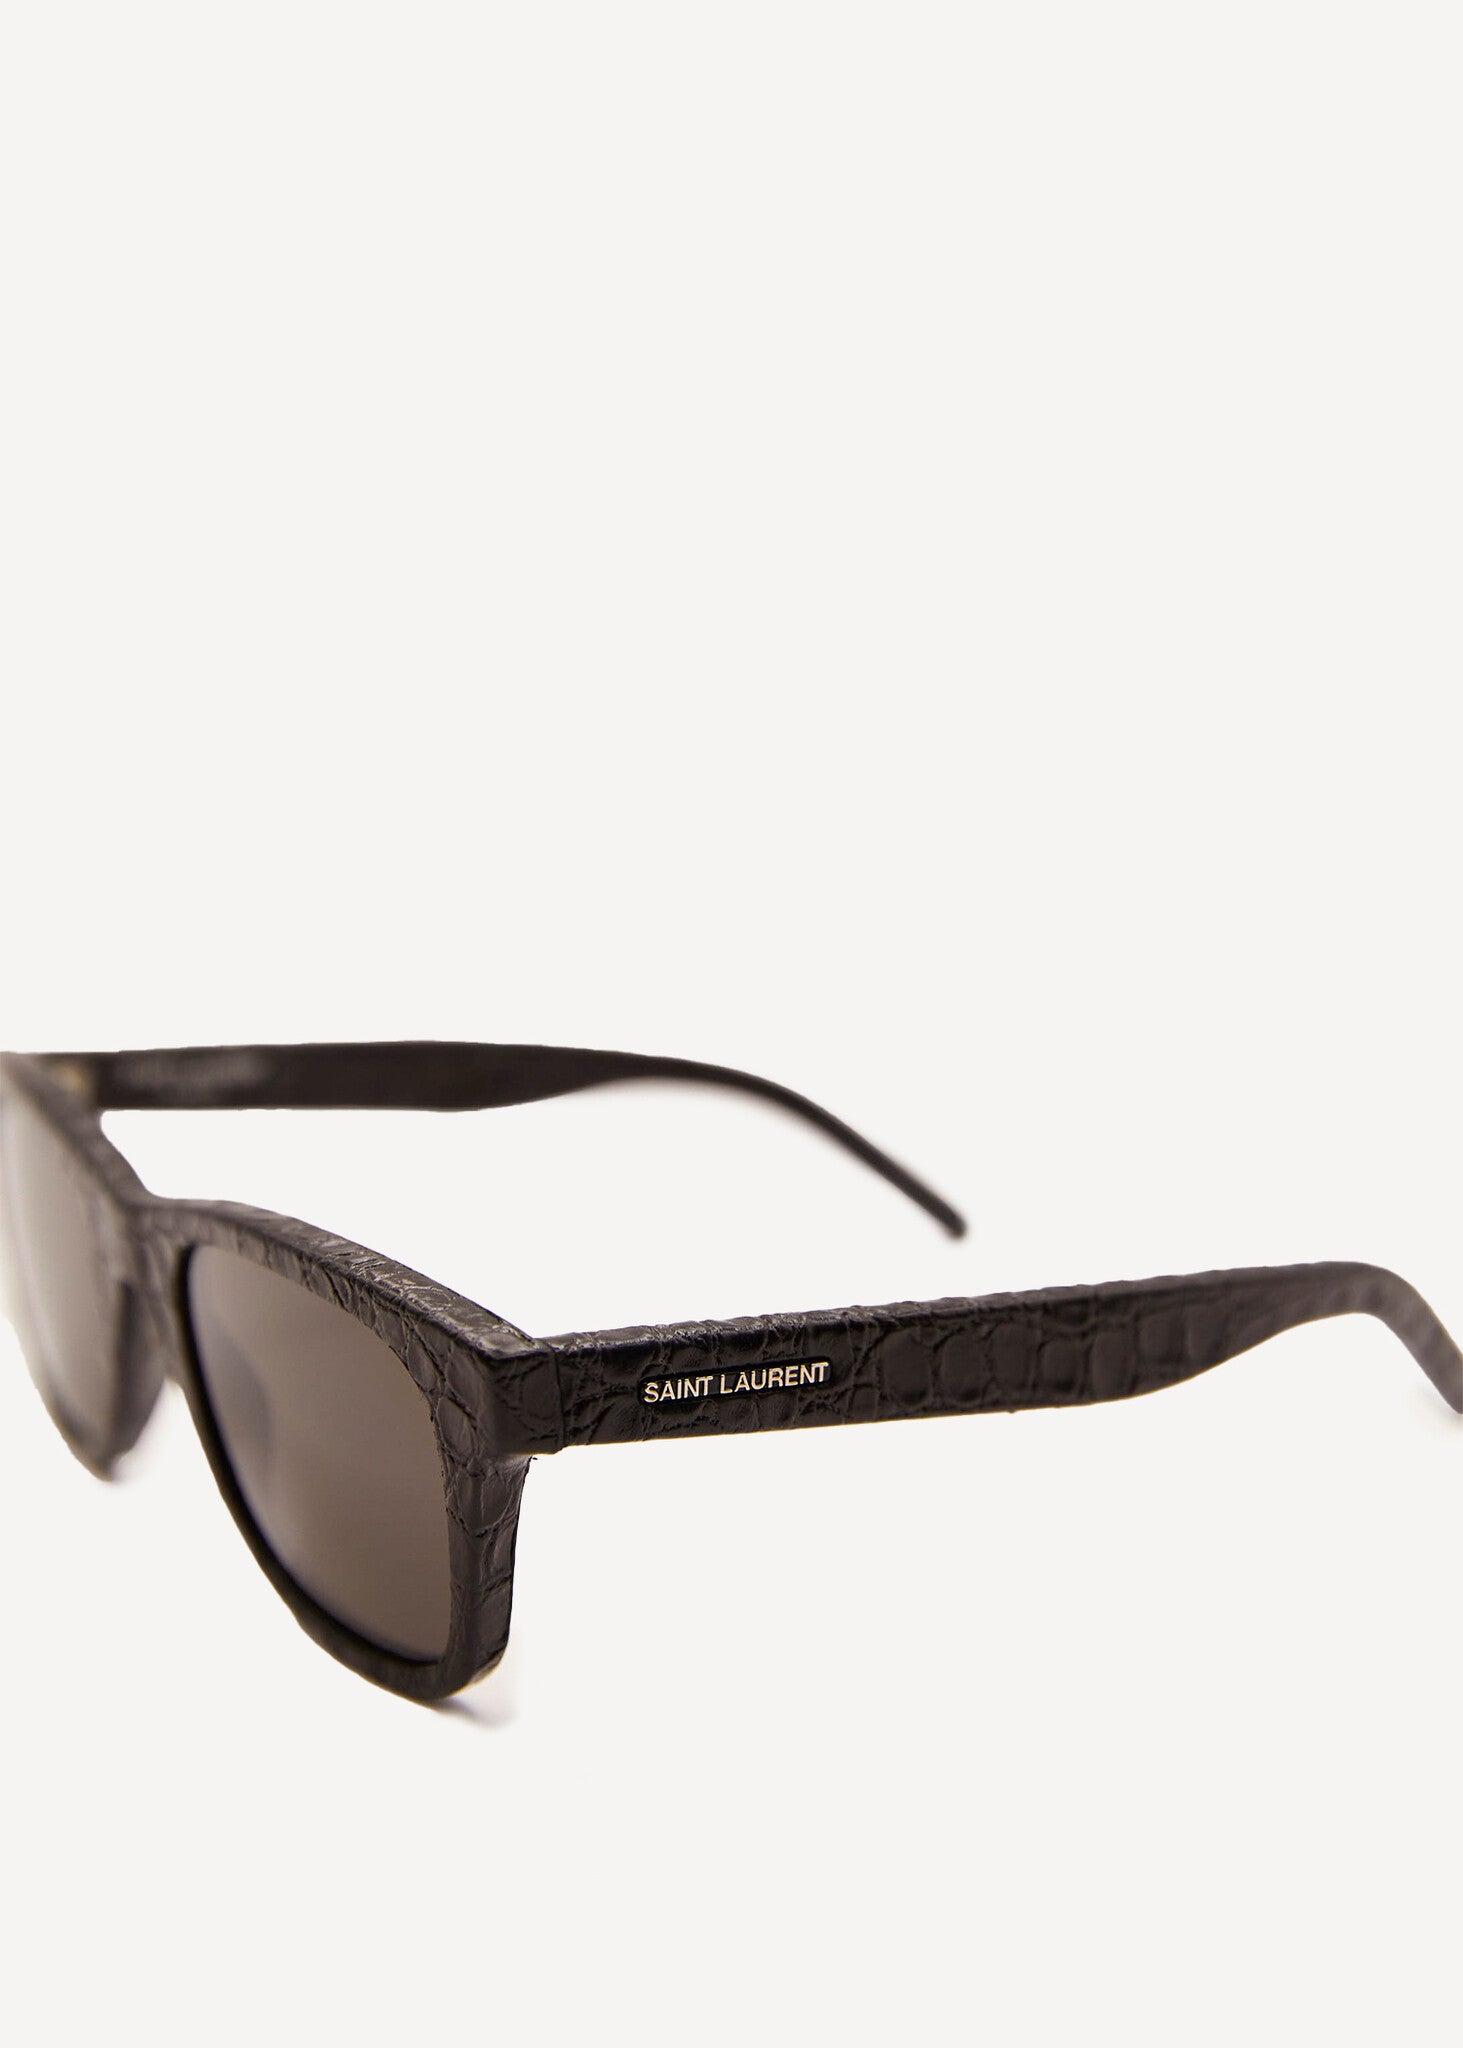 Saint Laurent Novelty Sunglasses